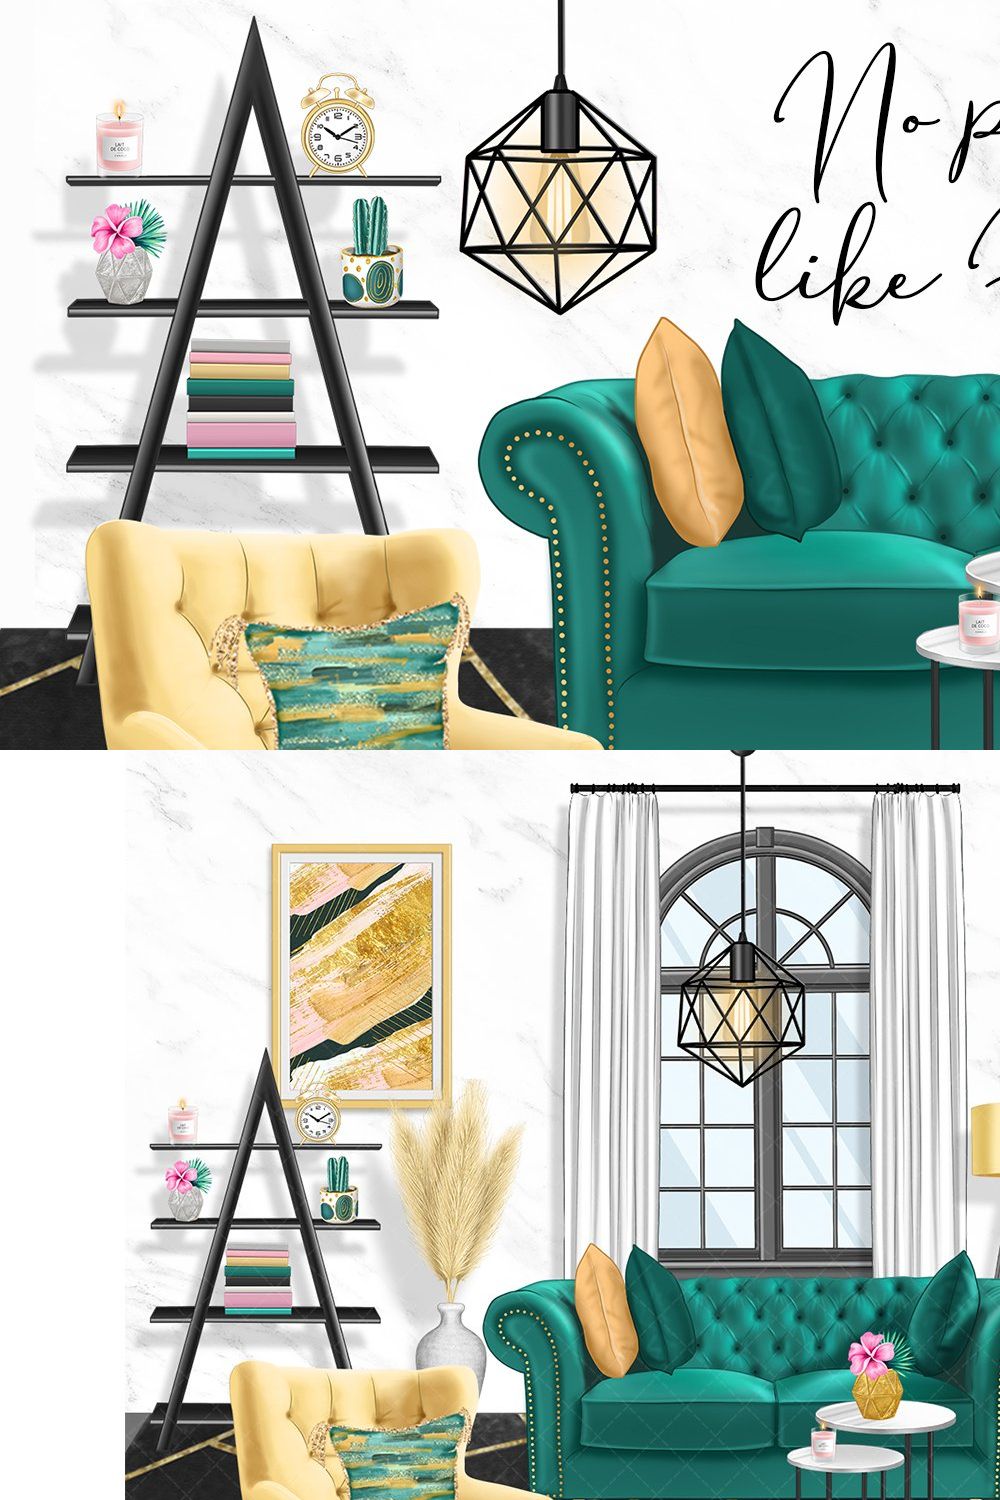 Home Clip Art, furniture design pinterest preview image.